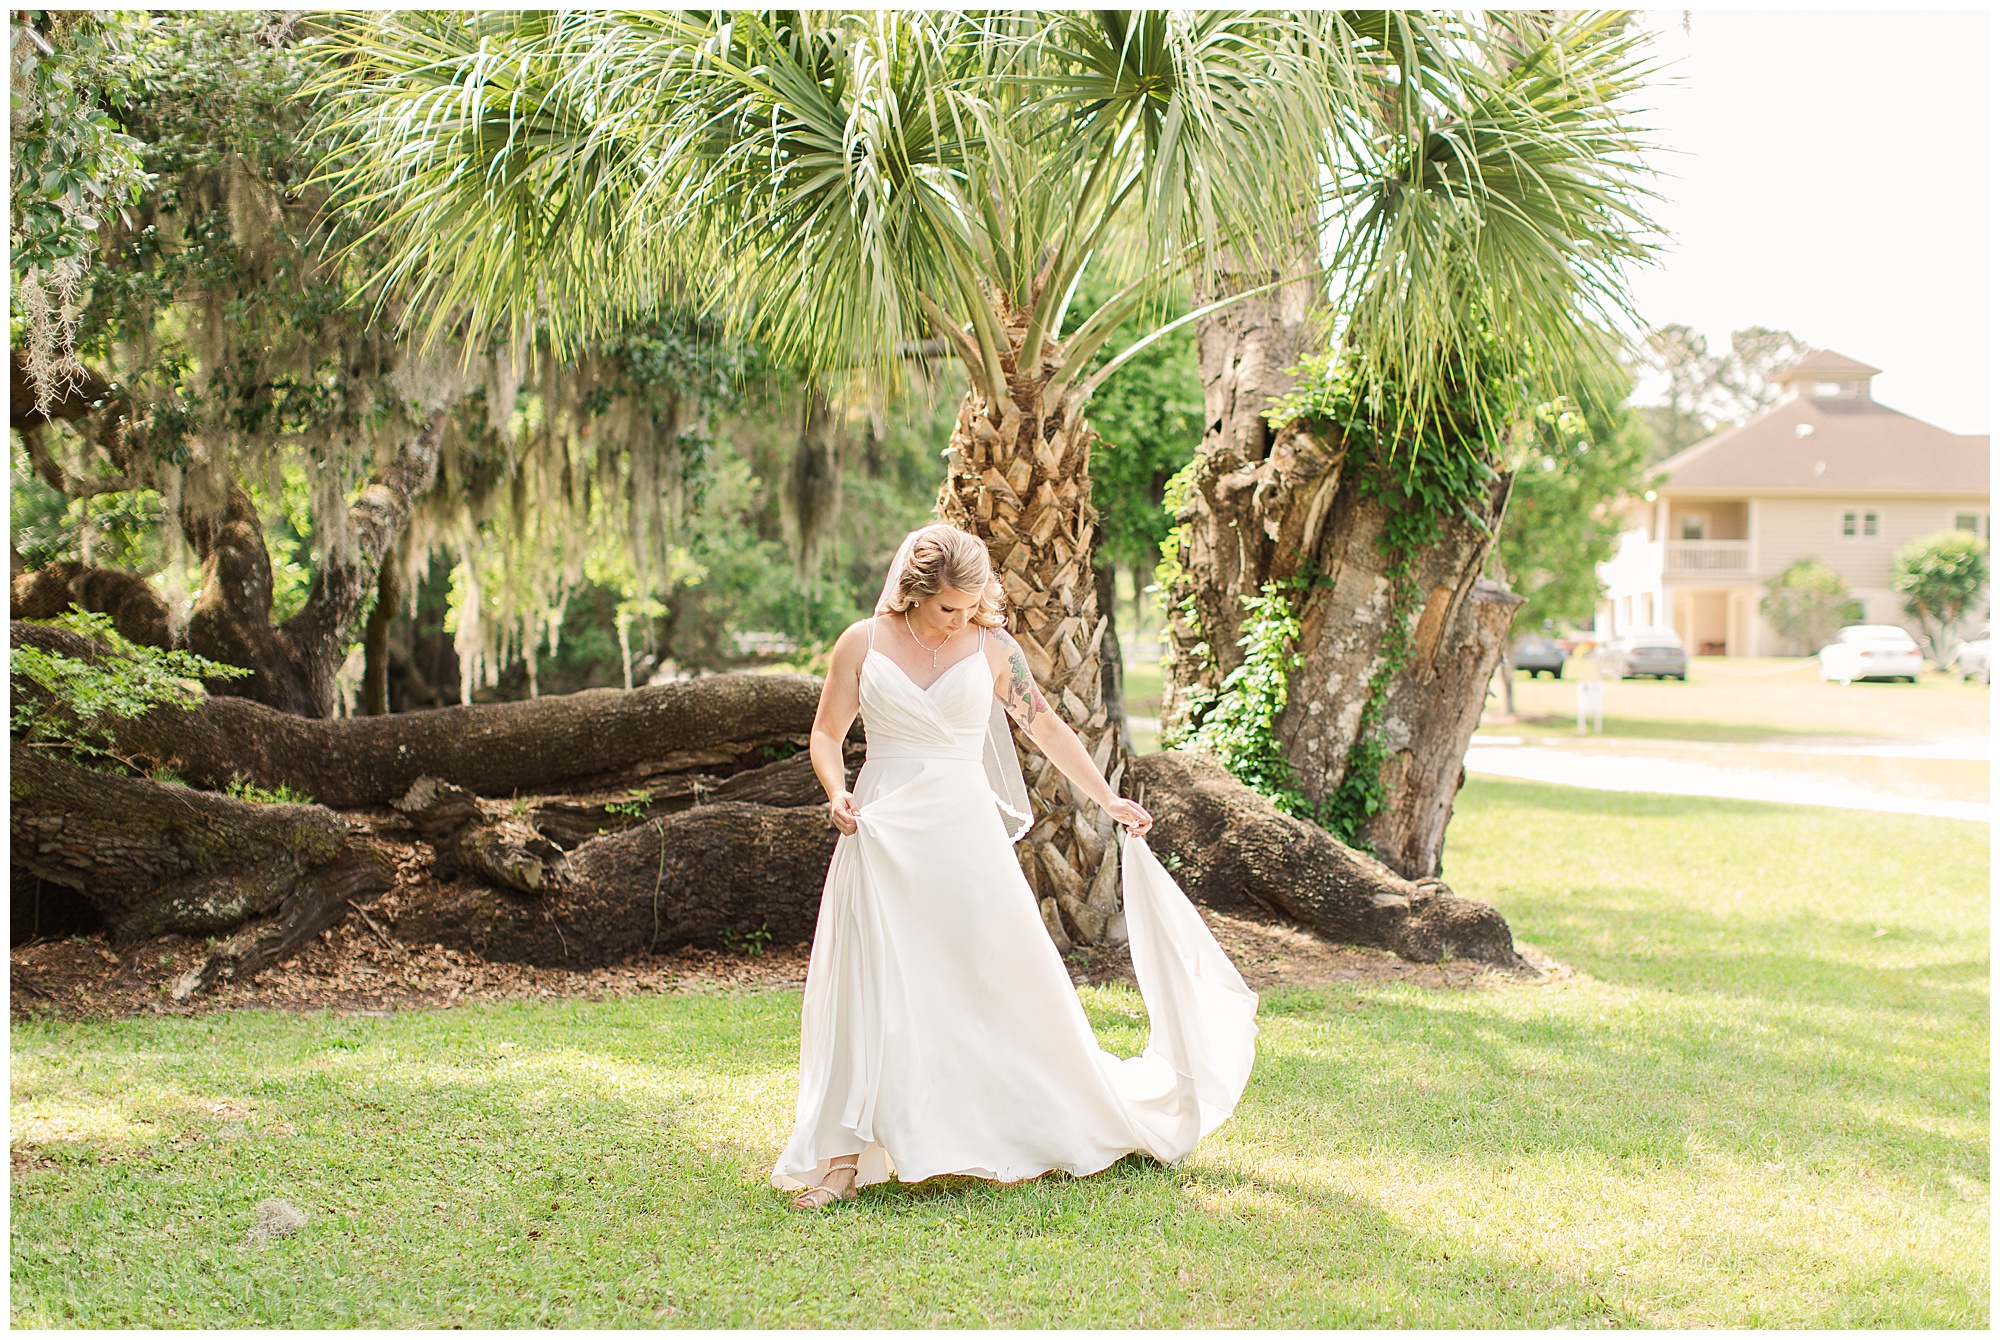 Molly & Steven, Red Gate Farms wedding, Kelley Stinson Photography, Savannah, Georgia, Georgia bride